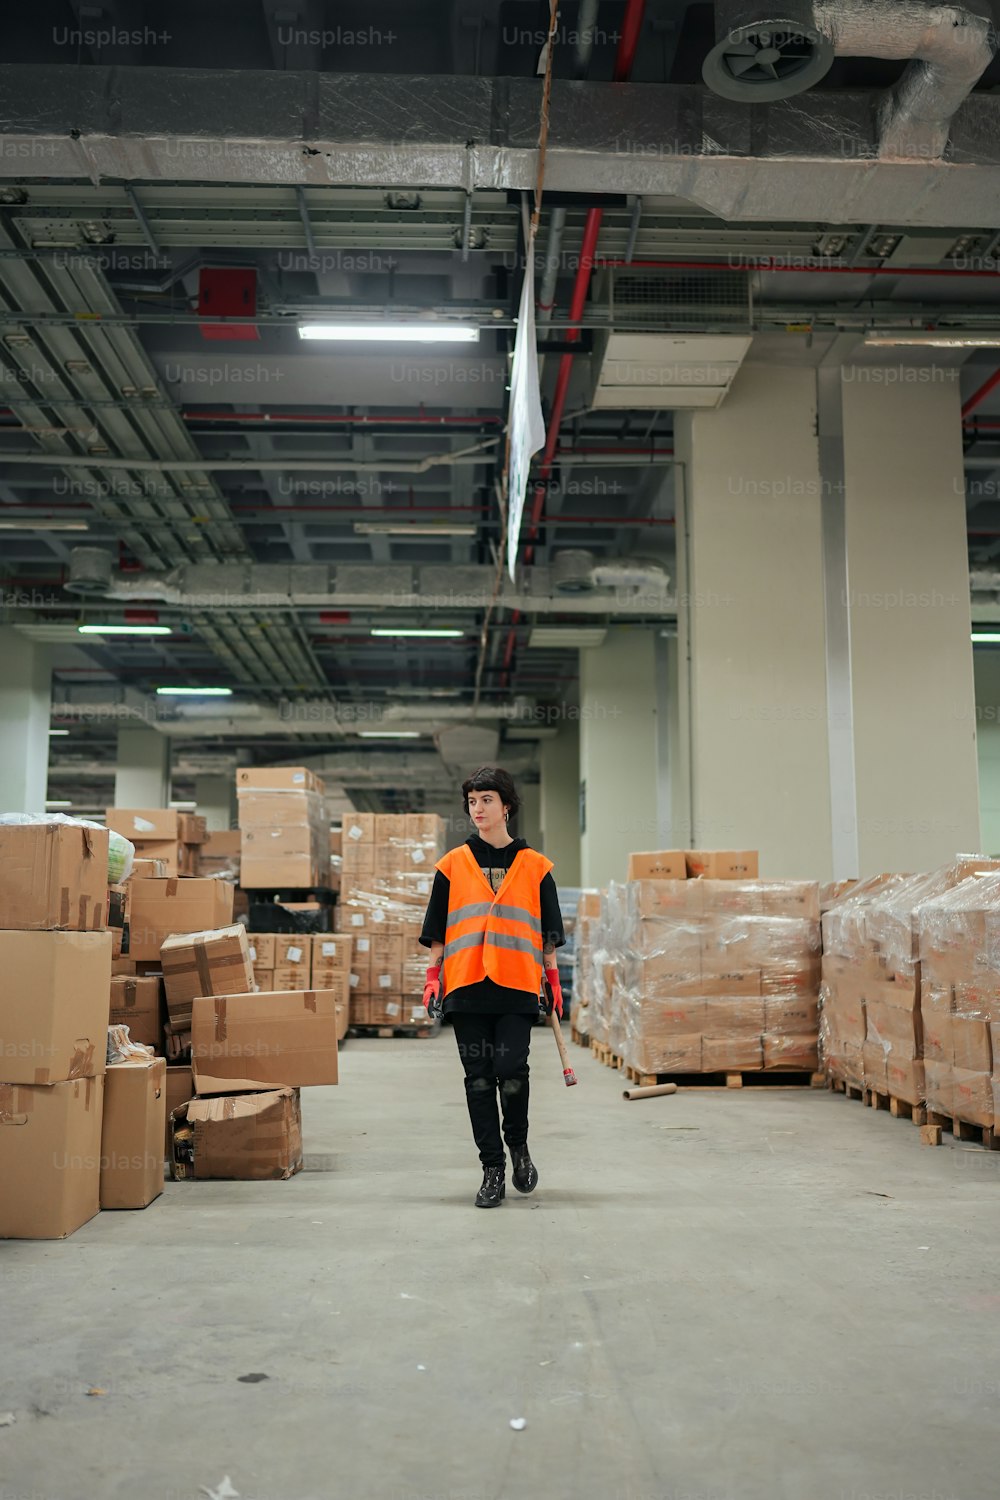 a woman in an orange vest walking through a warehouse